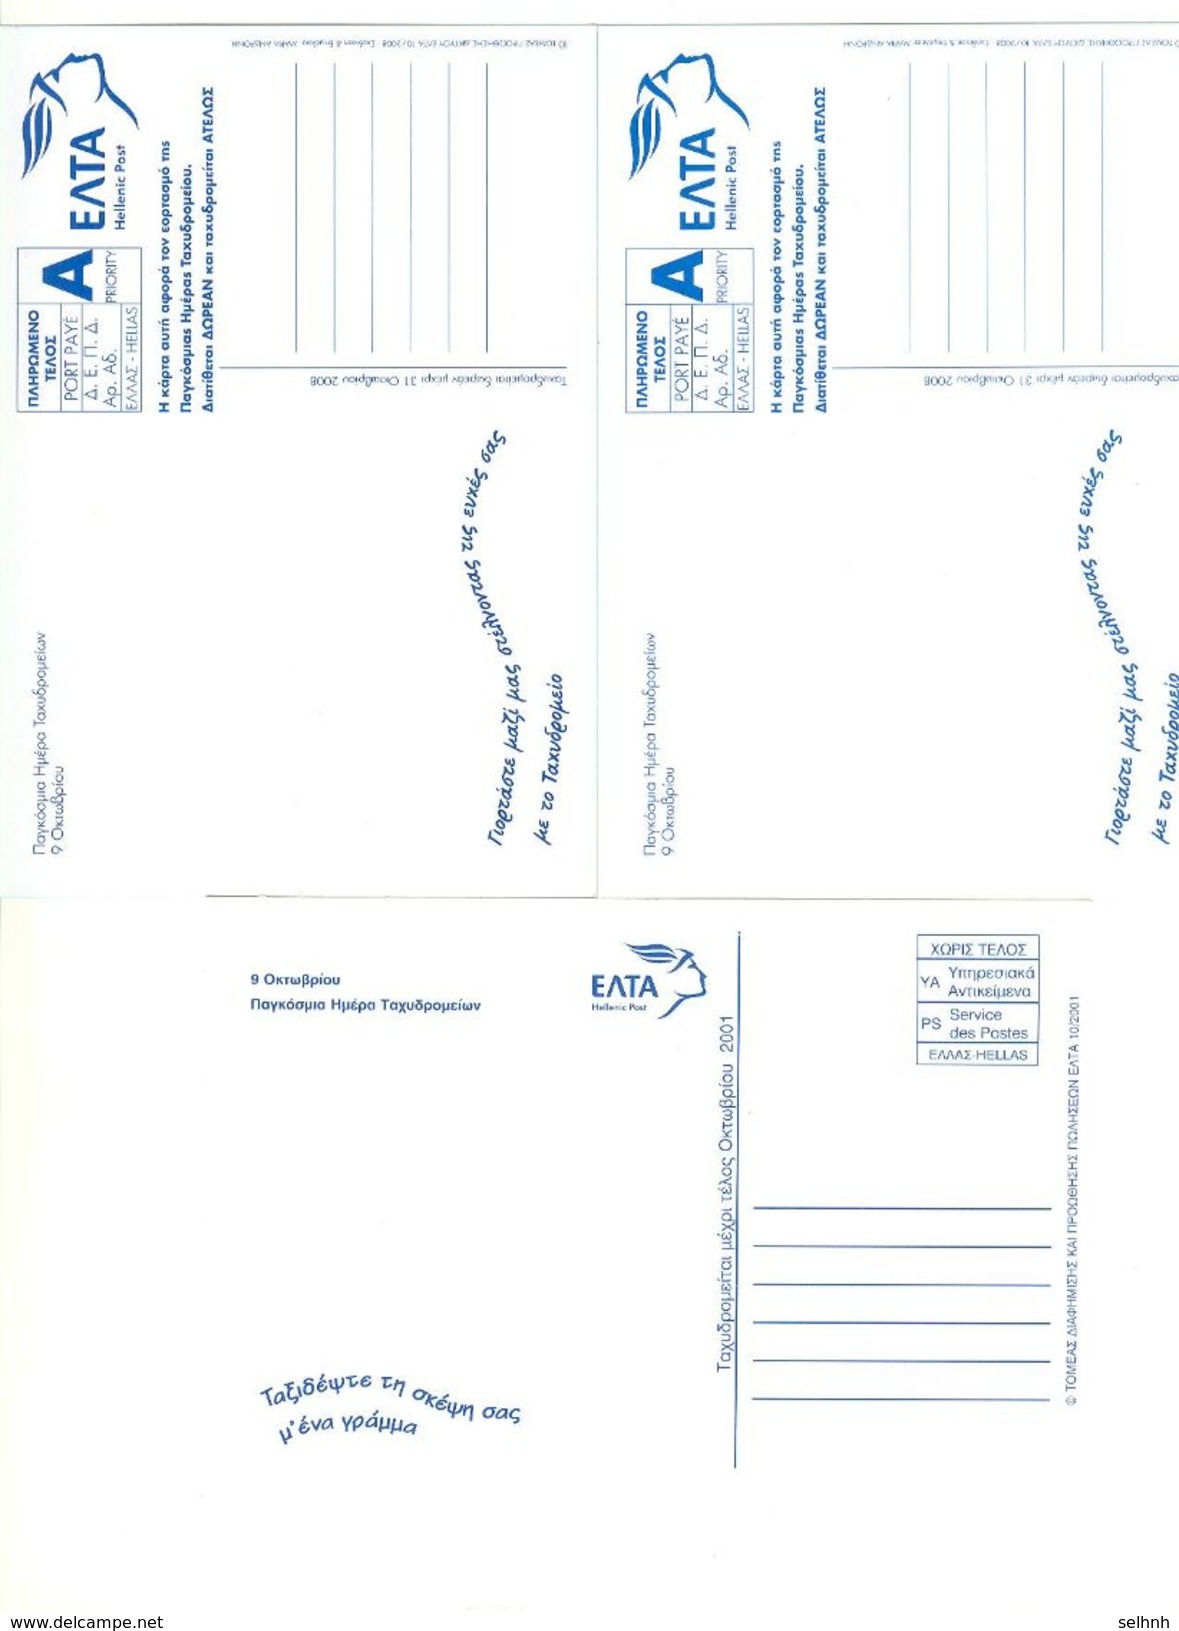 GREECE GRECE GREEK COMMEMORATIVE POSTMARK 70 YEARS OF PHILATELIC SOSIETY OF CORFU 9-10-2001 ON CARD FROM ELTA - Maschinenstempel (Werbestempel)